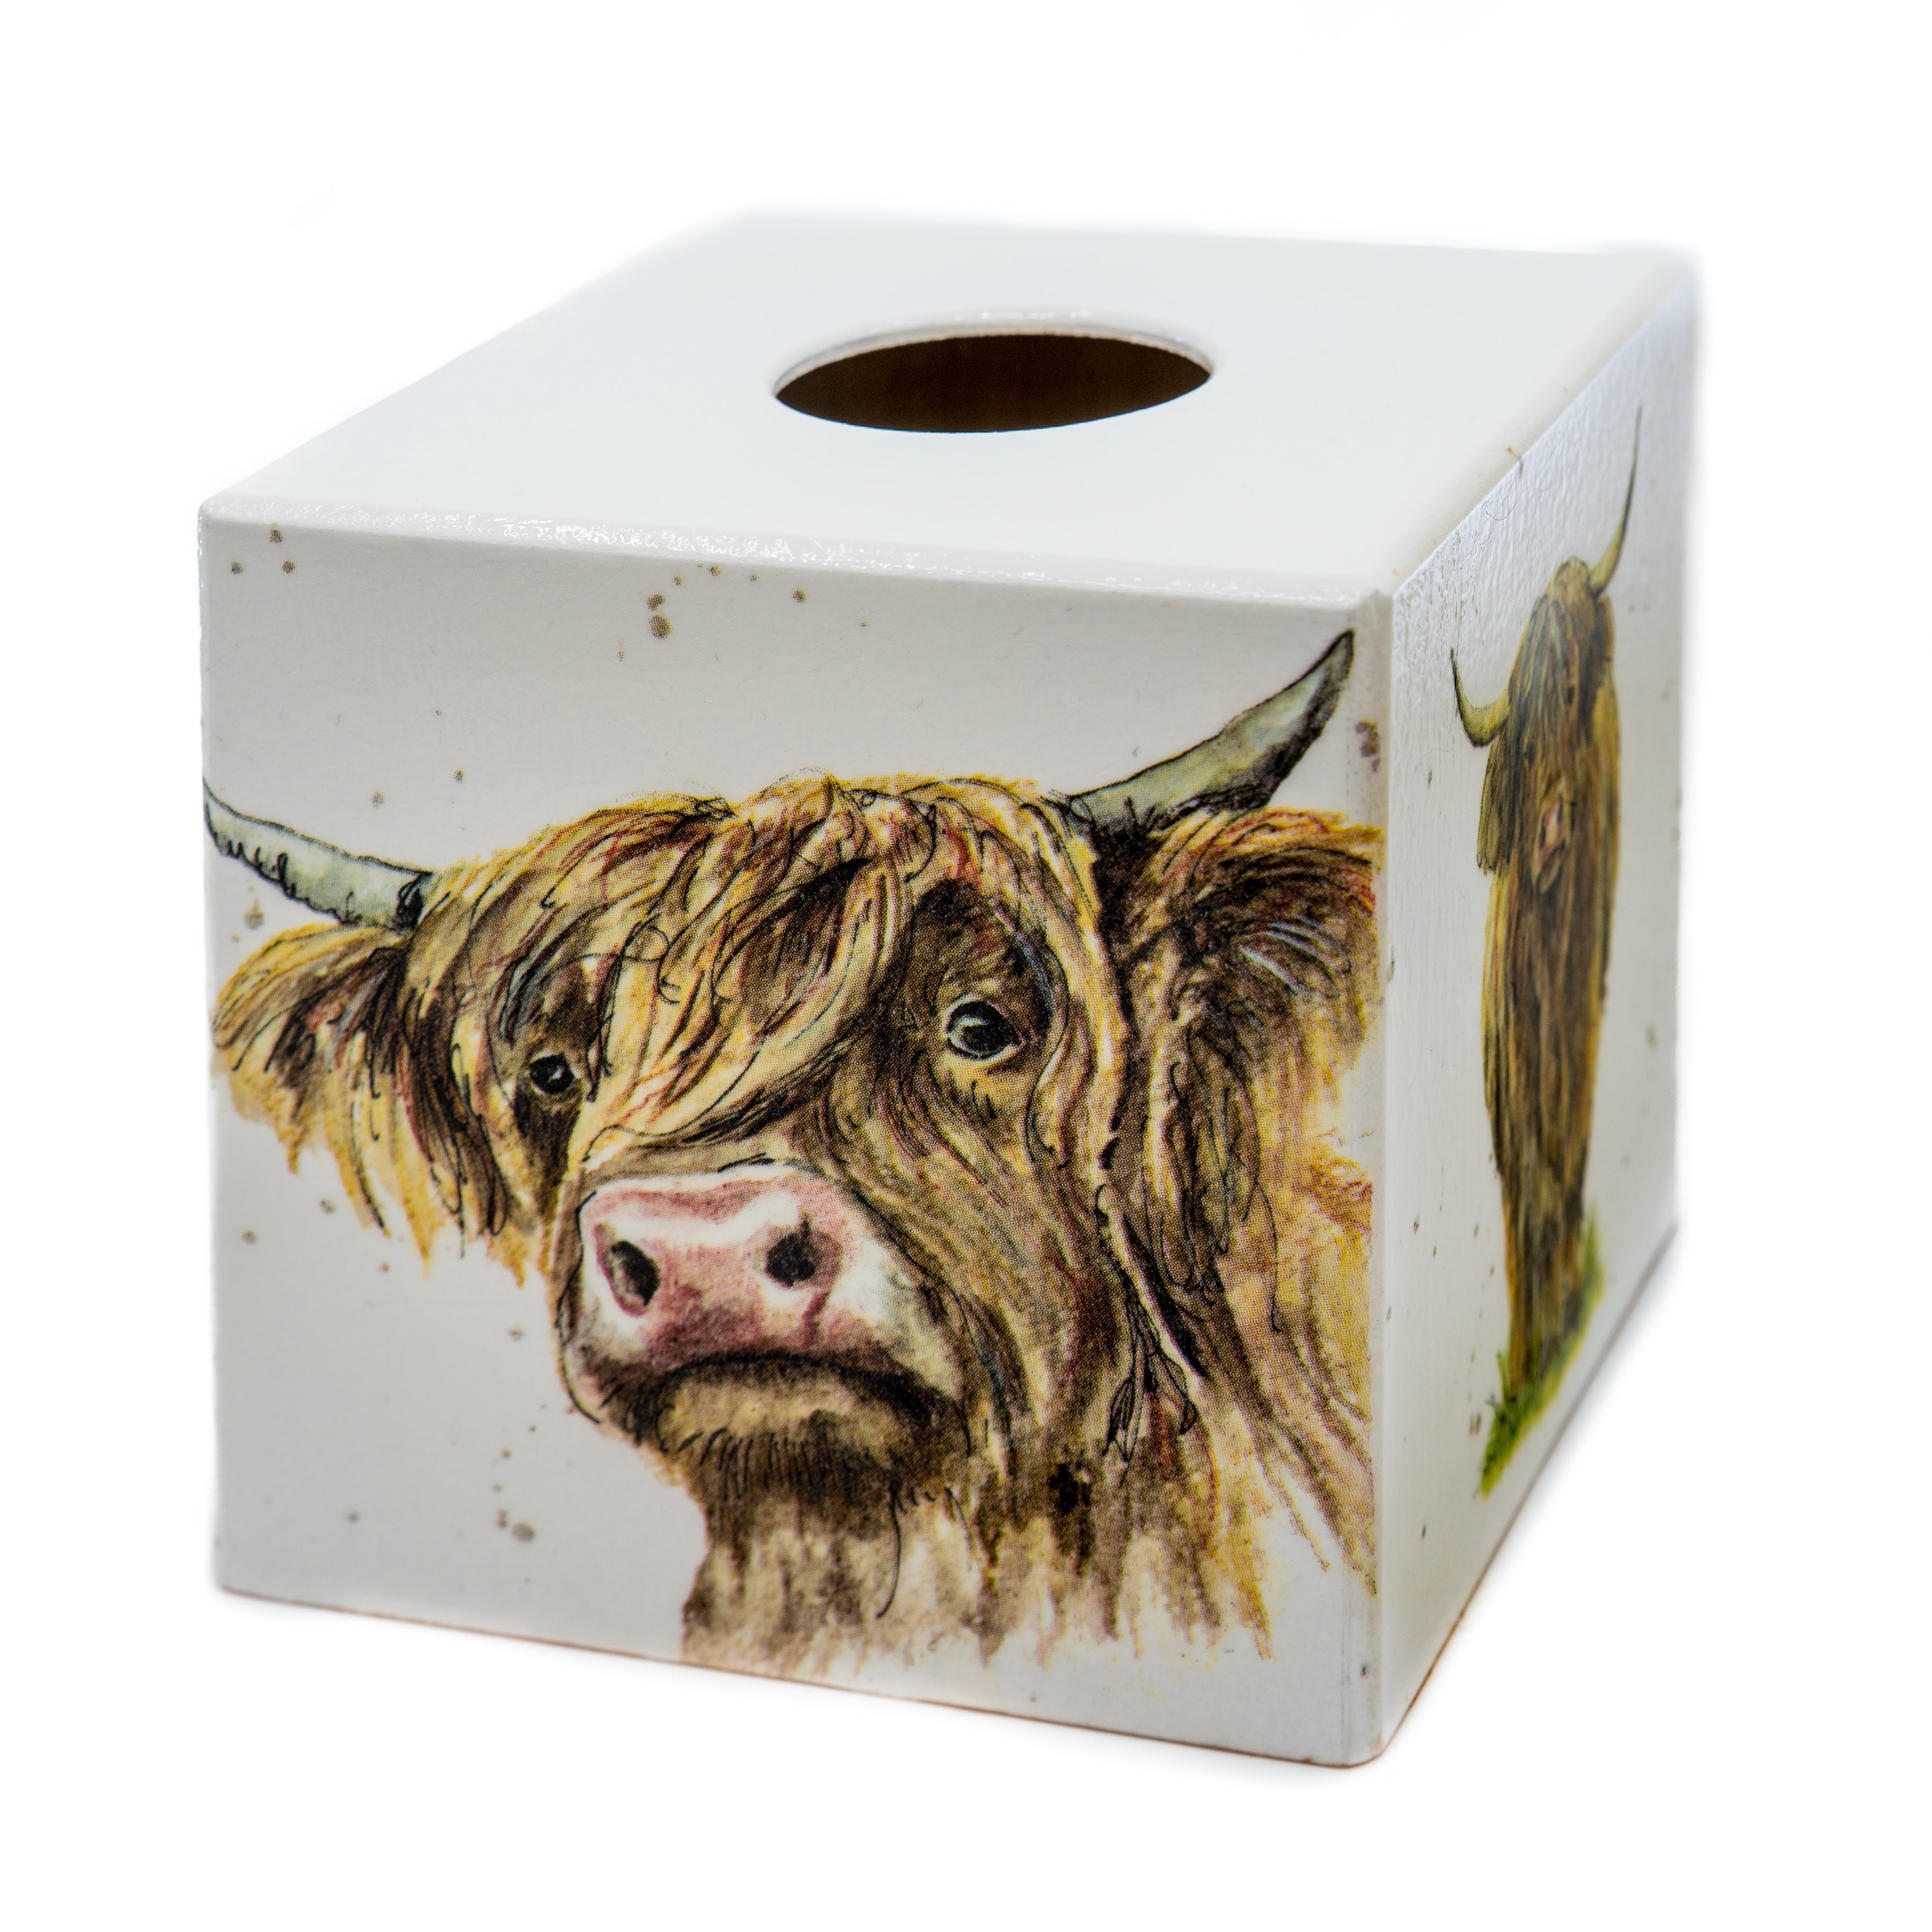 Highland Cow Tissue box cover